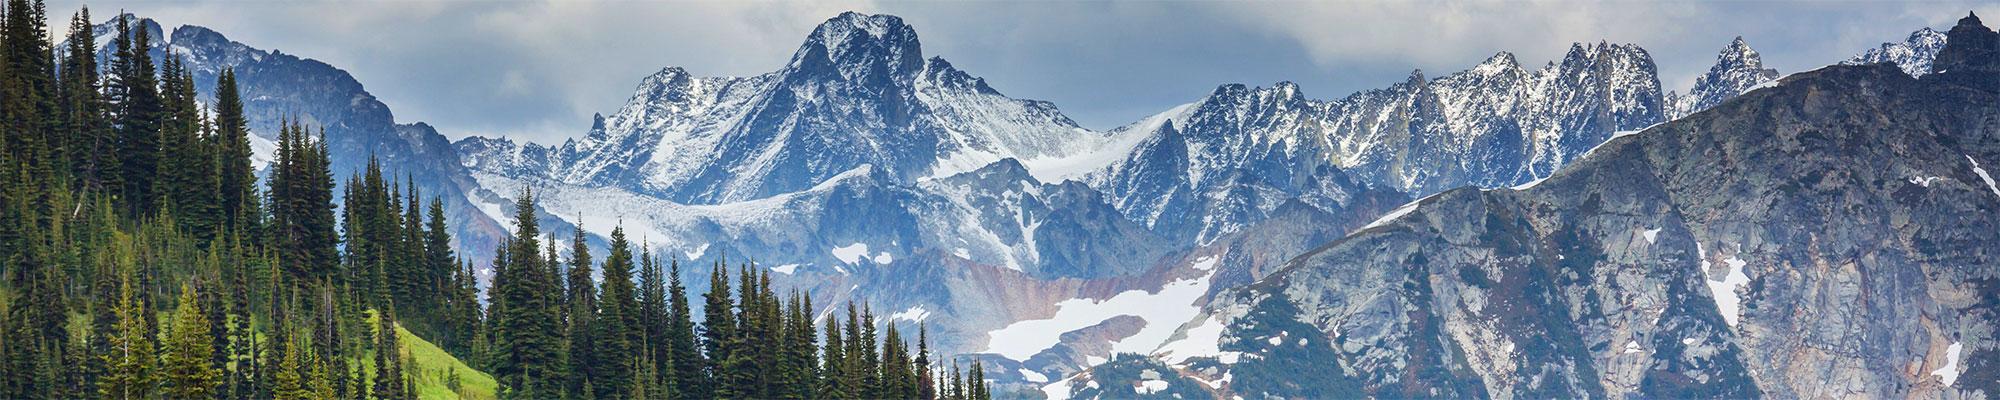 North Cascades mountain range